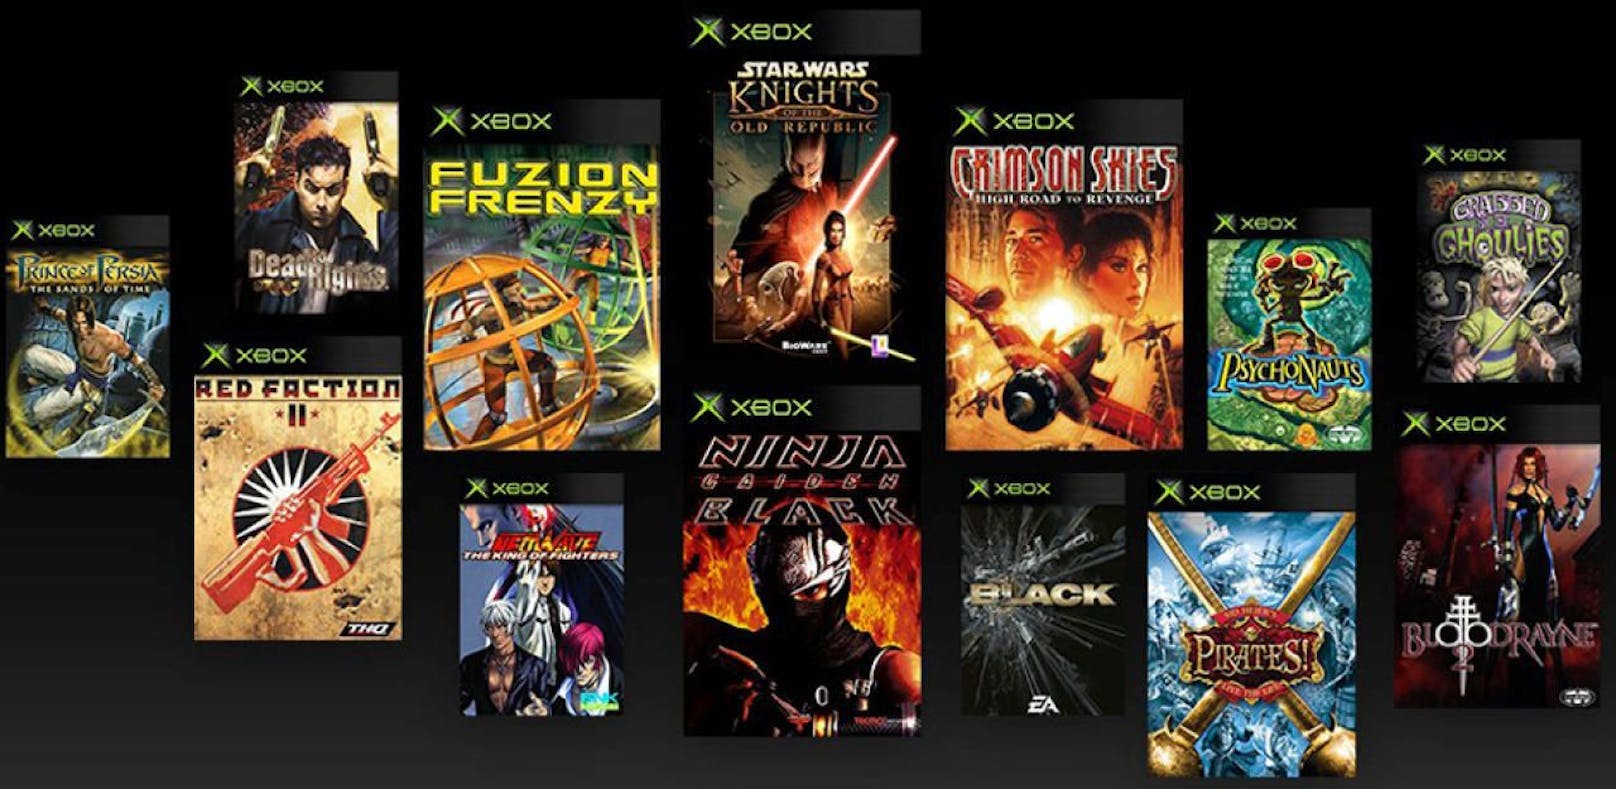 Diese Game-Klassiker kommen auf die Xbox